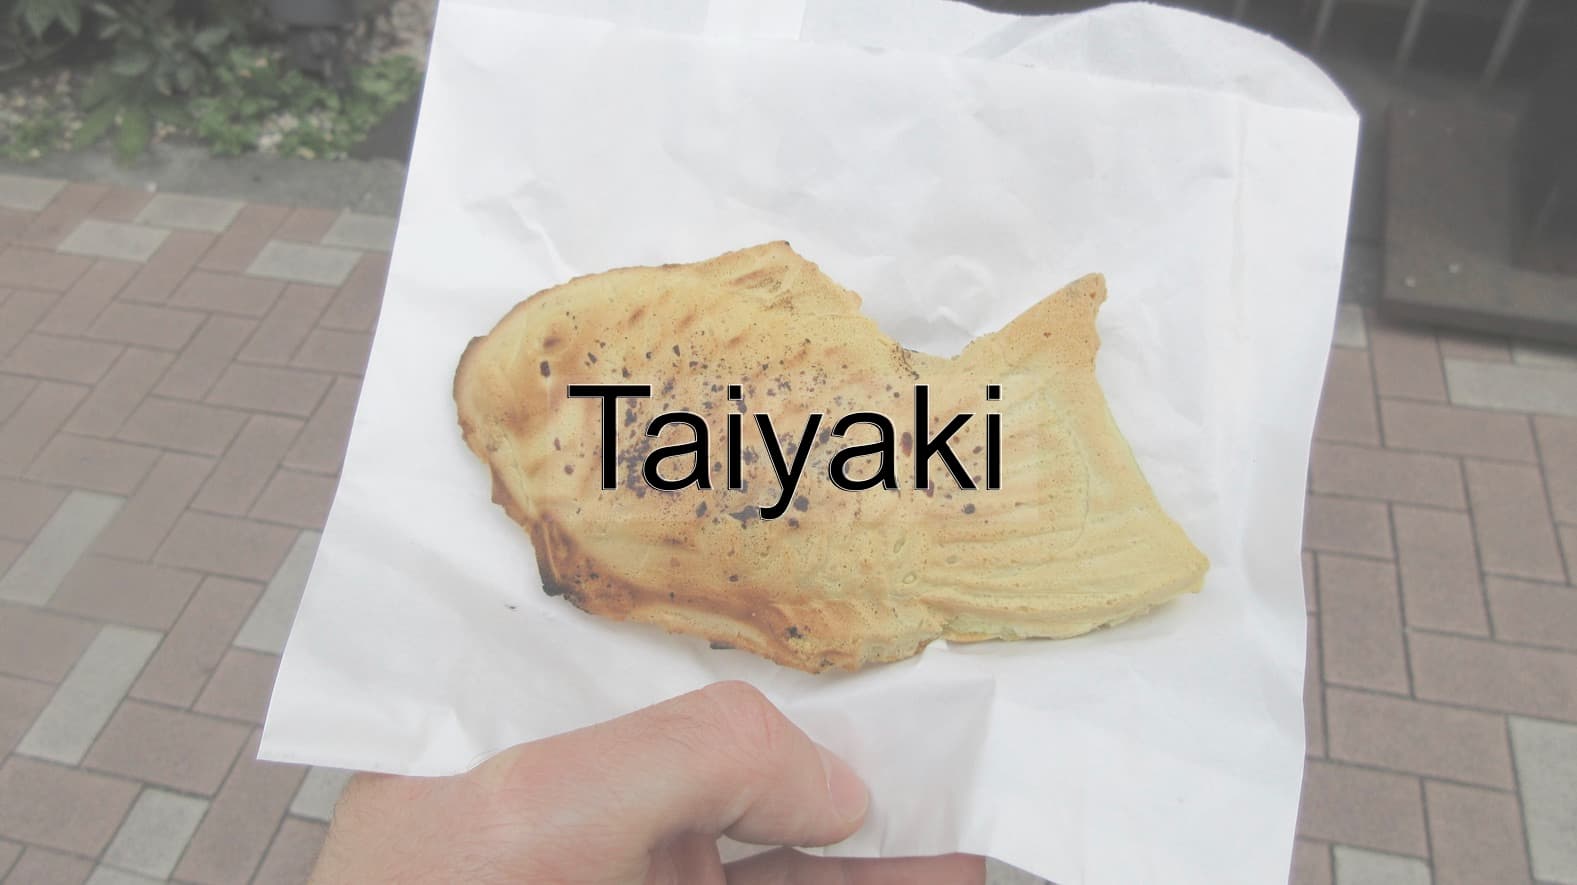 Japanese Food, Japan, Food, Japanese sweets, Japanese-style confections, Taiyaki